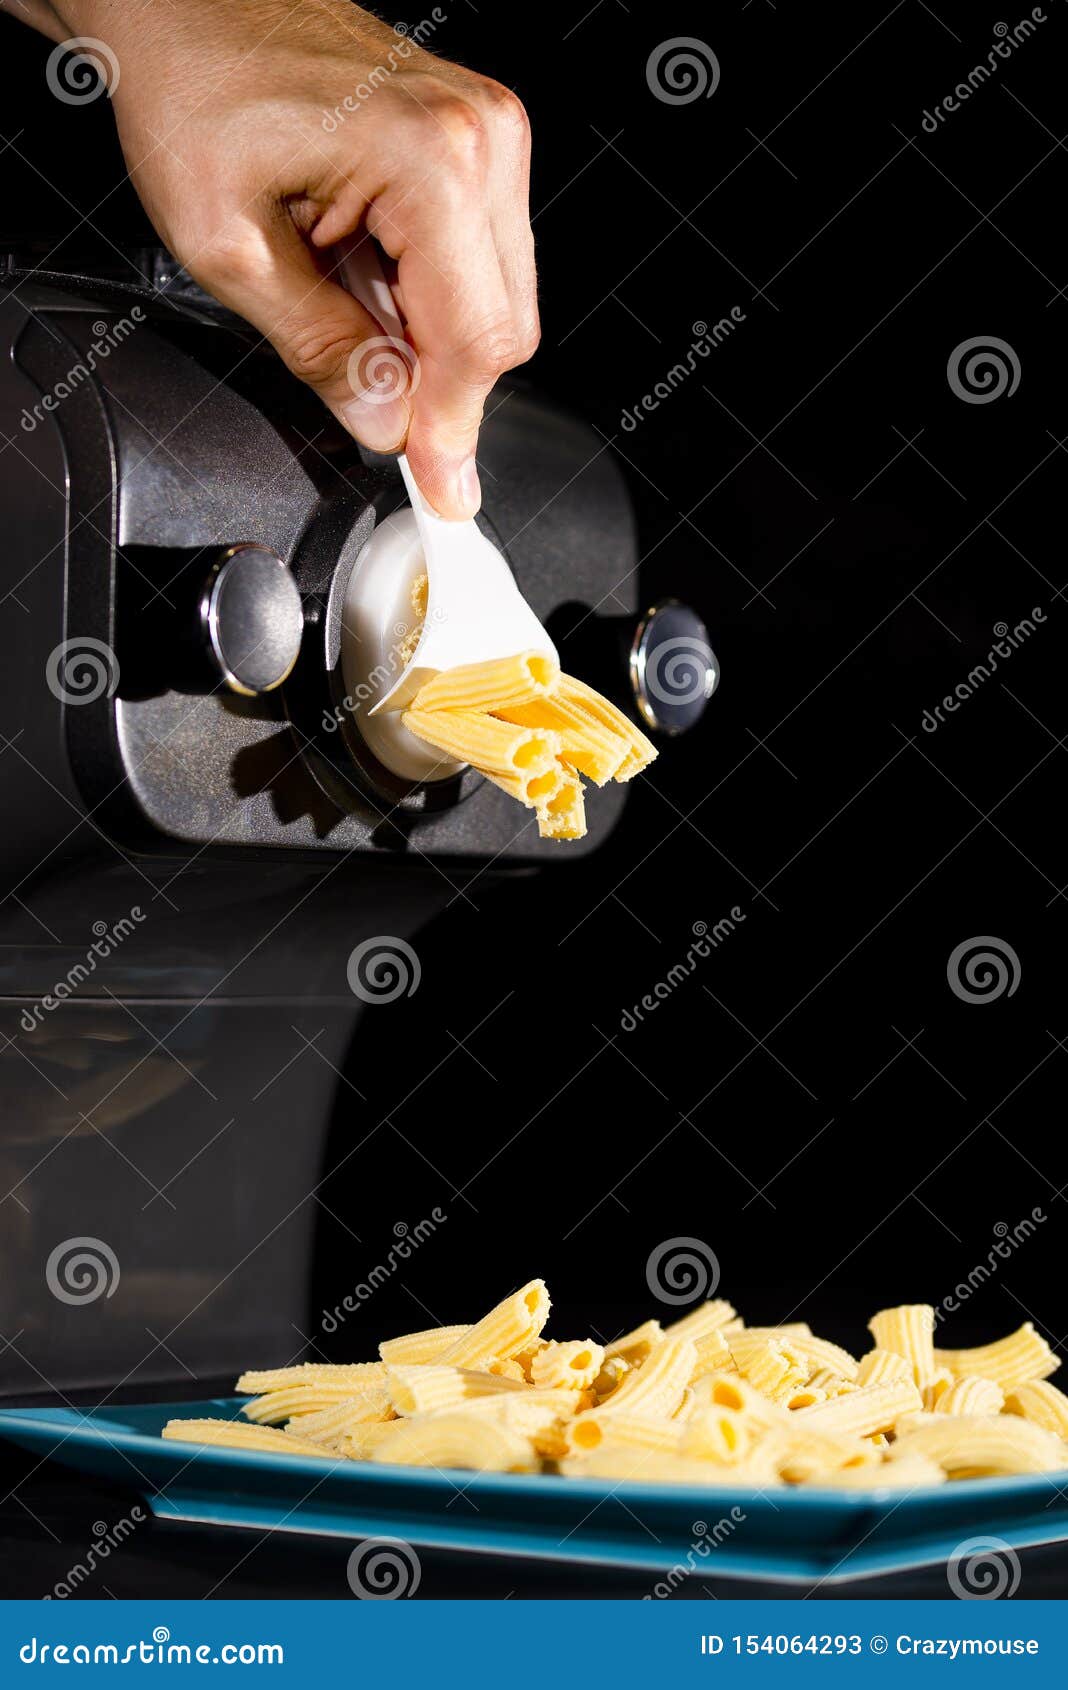 https://thumbs.dreamstime.com/z/preparing-home-made-rigatoni-eggs-pasta-pasta-maker-indifinited-man-cutting-rigatoni-close-up-photo-black-154064293.jpg